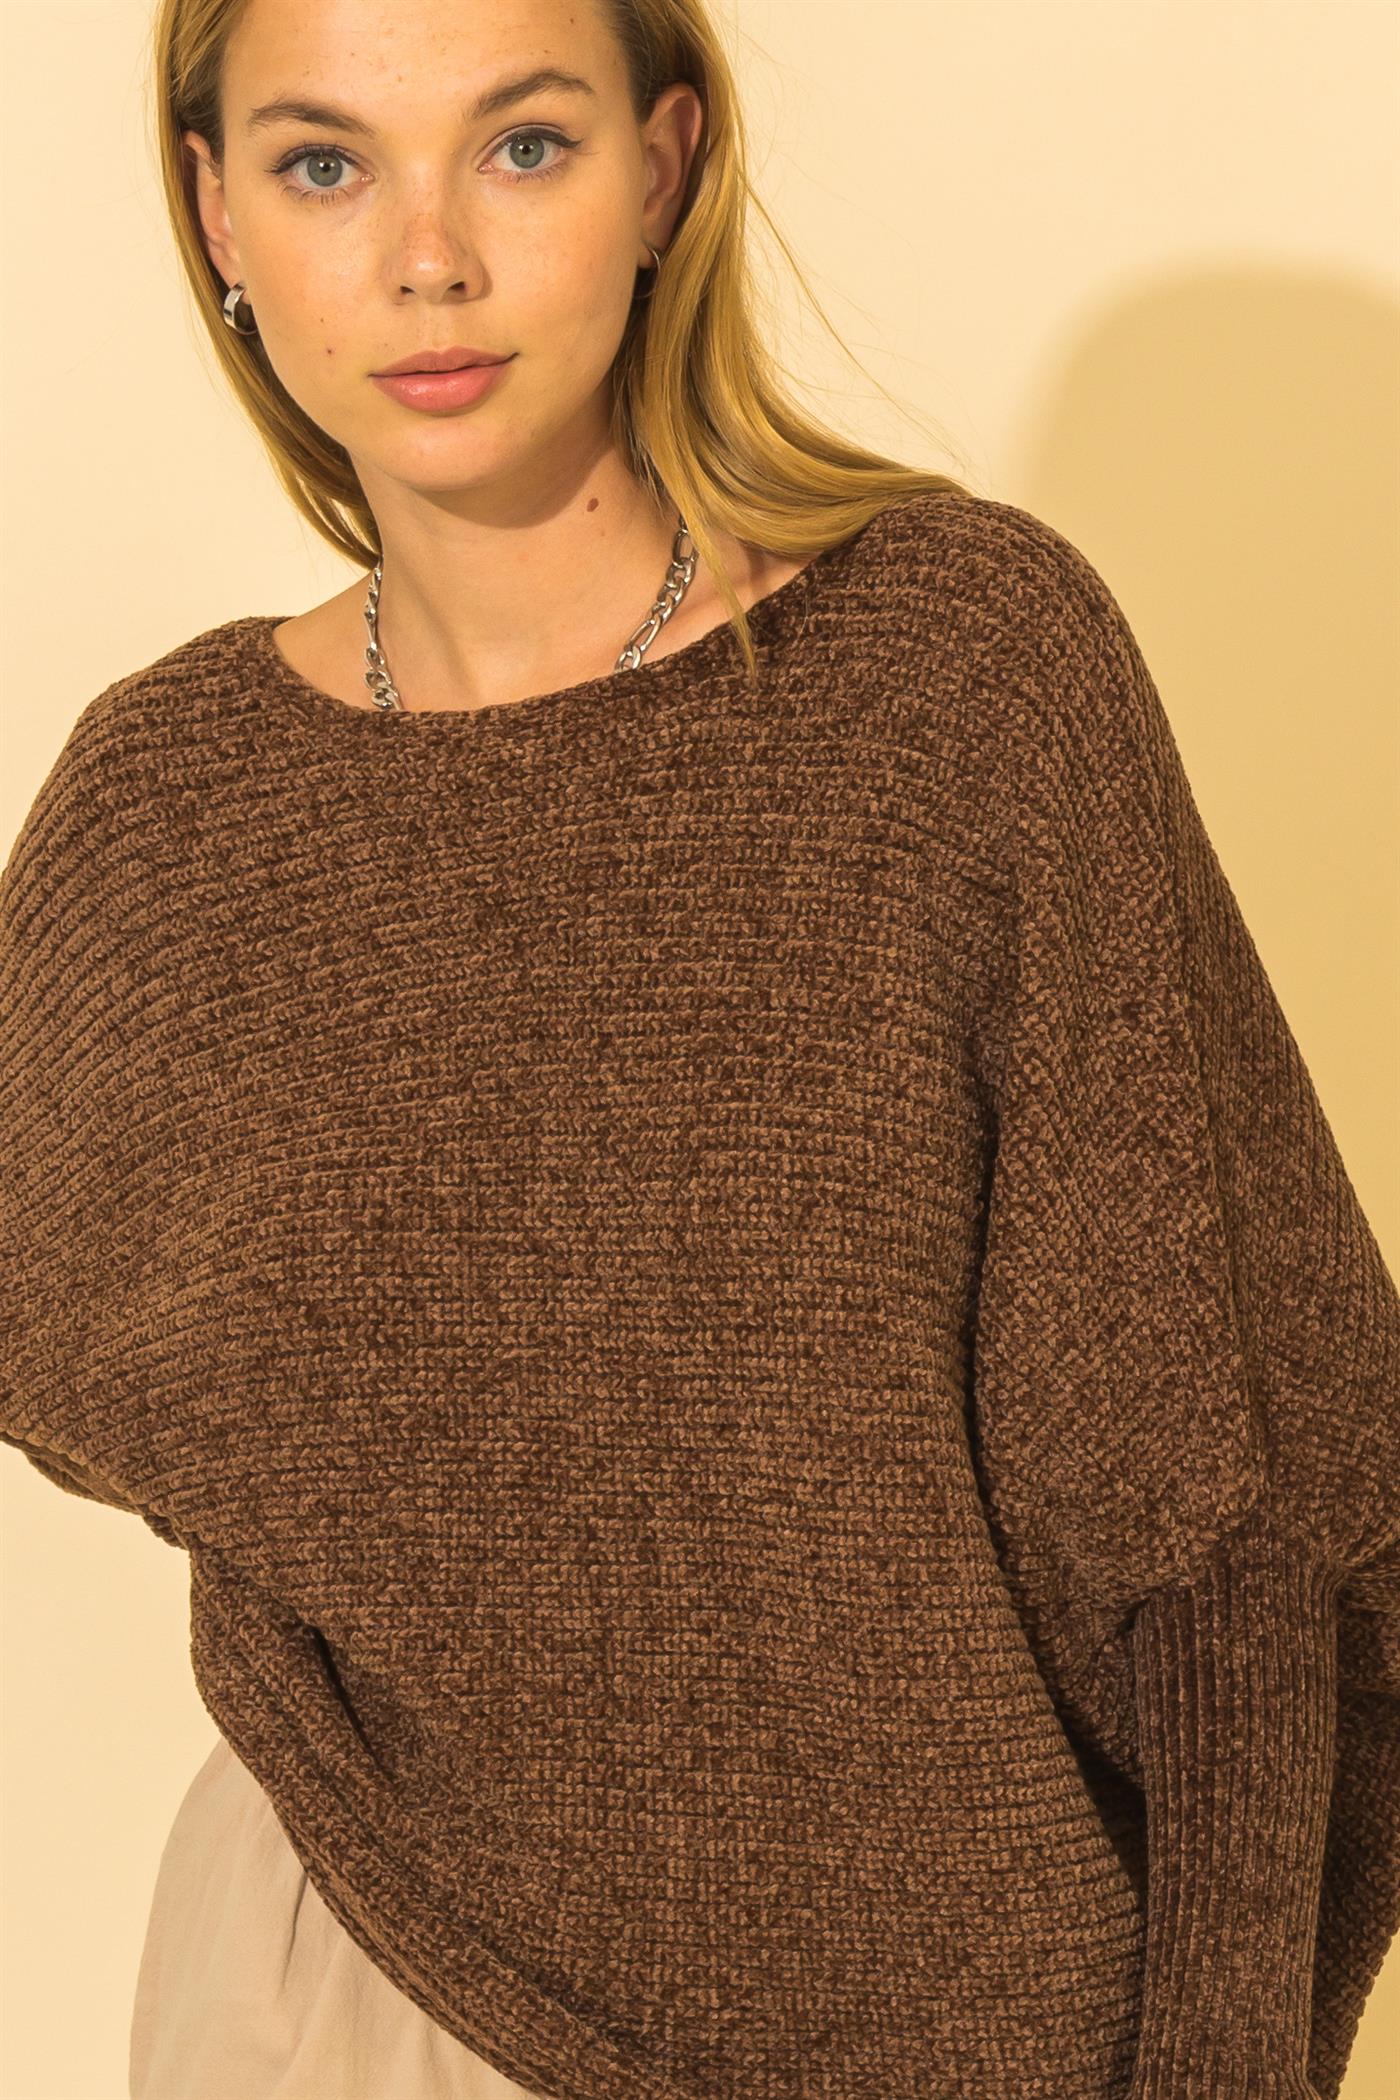 Coco Harmony Dolman Sleeve Sweater in Brown